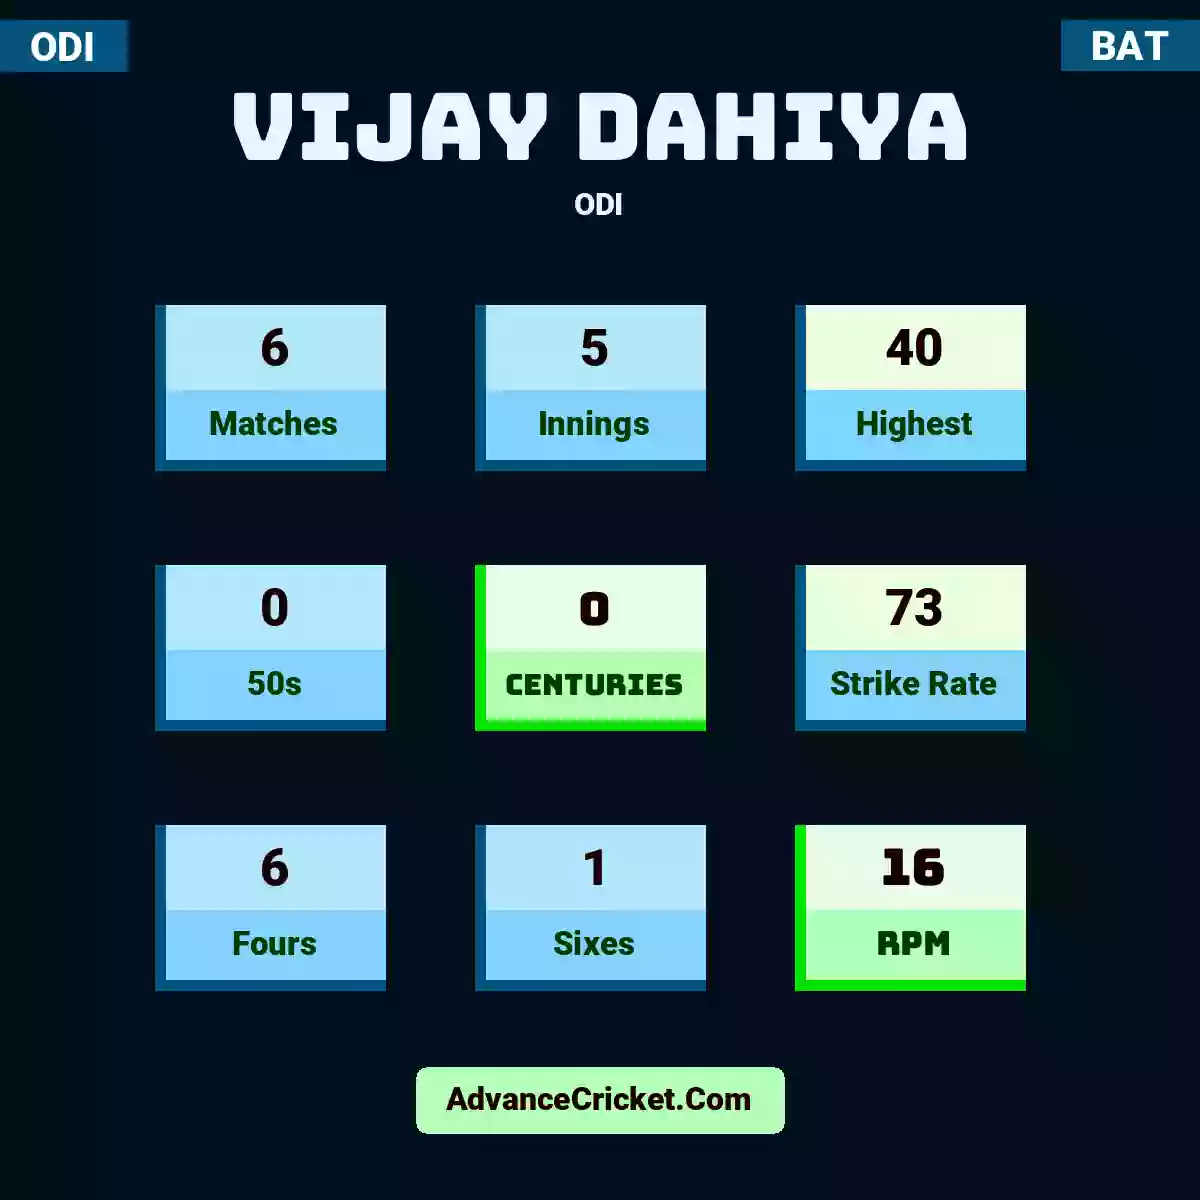 Vijay Dahiya ODI , Vijay Dahiya played 6 matches, scored 40 runs as highest, 0 half-centuries, and 0 centuries, with a strike rate of 73. V.Dahiya hit 6 fours and 1 sixes, with an RPM of 16.